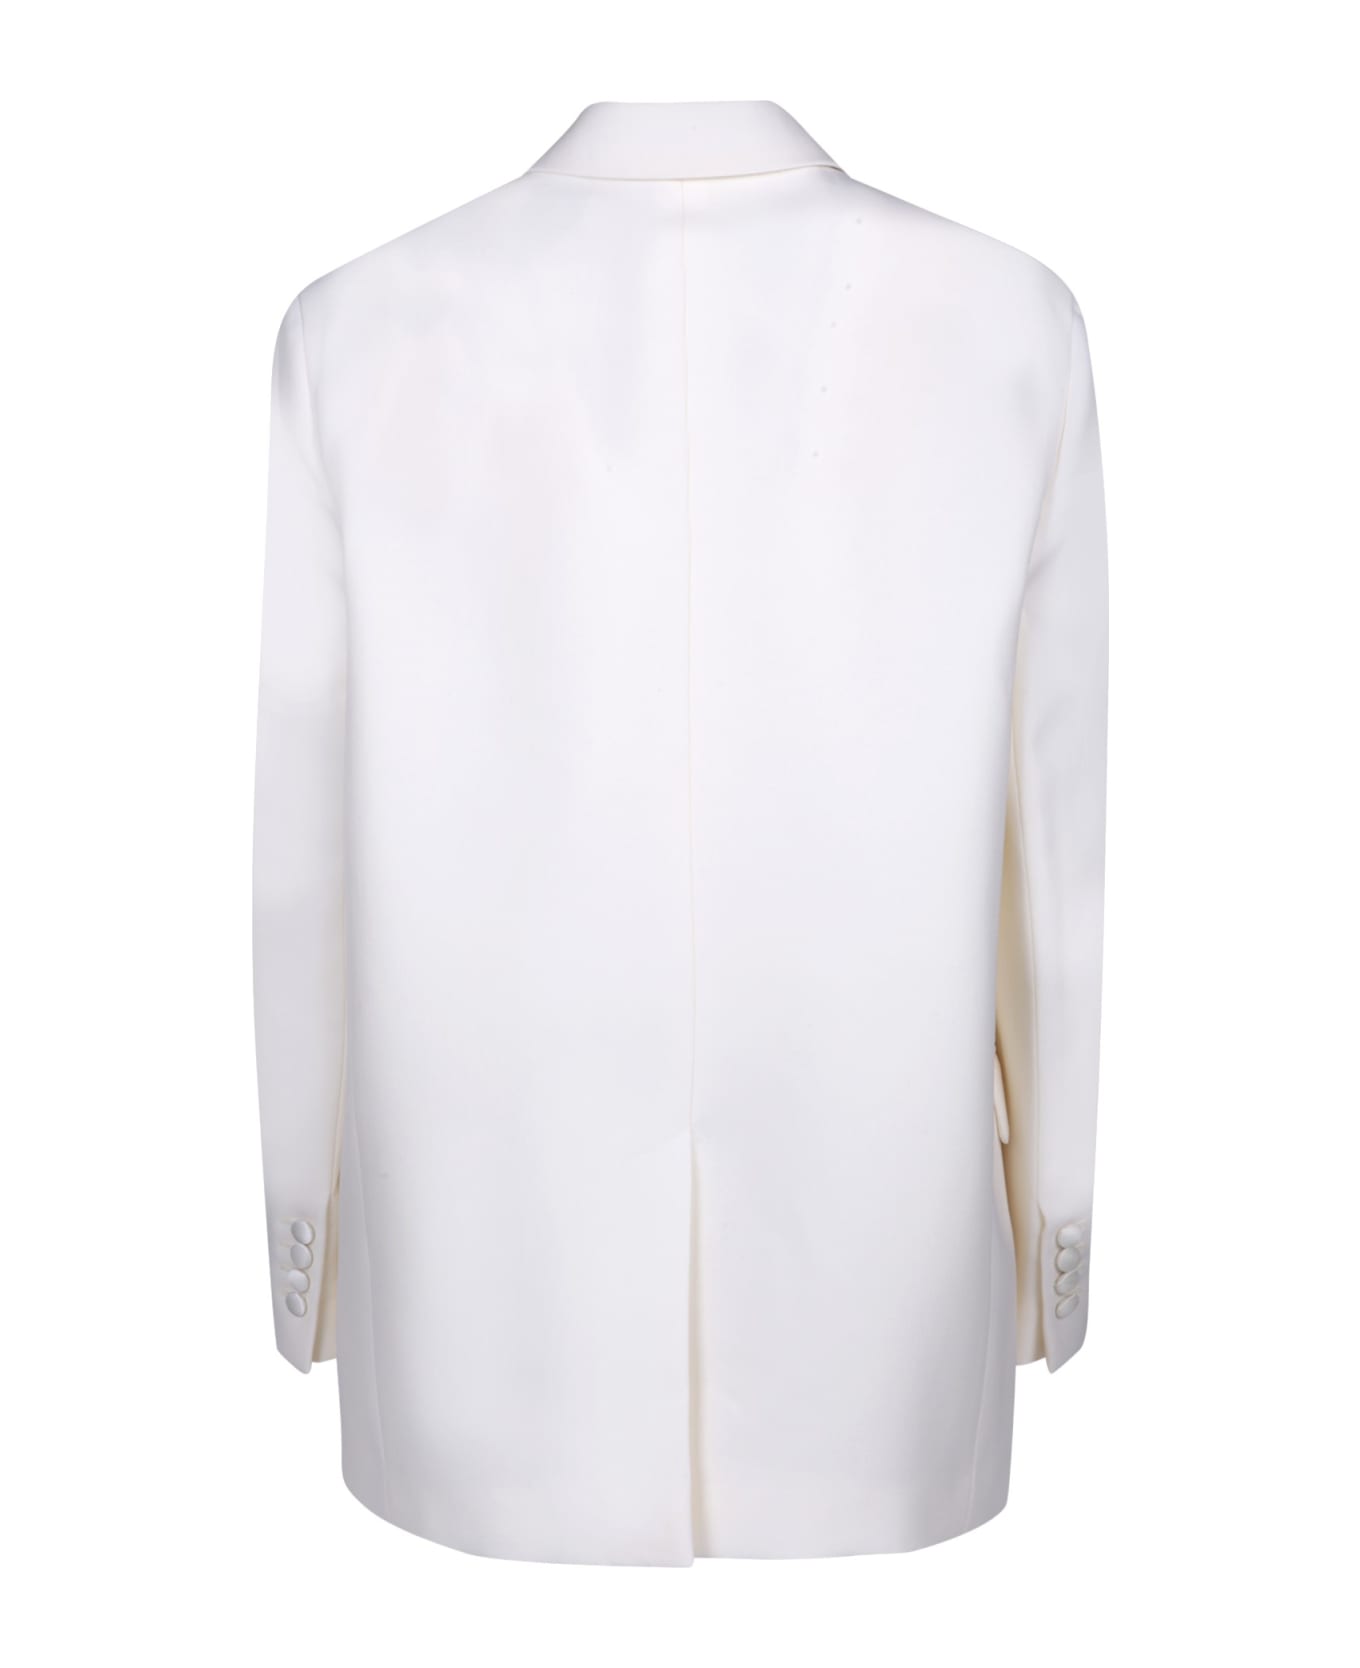 Rev The Helm Ivory Jacket - White